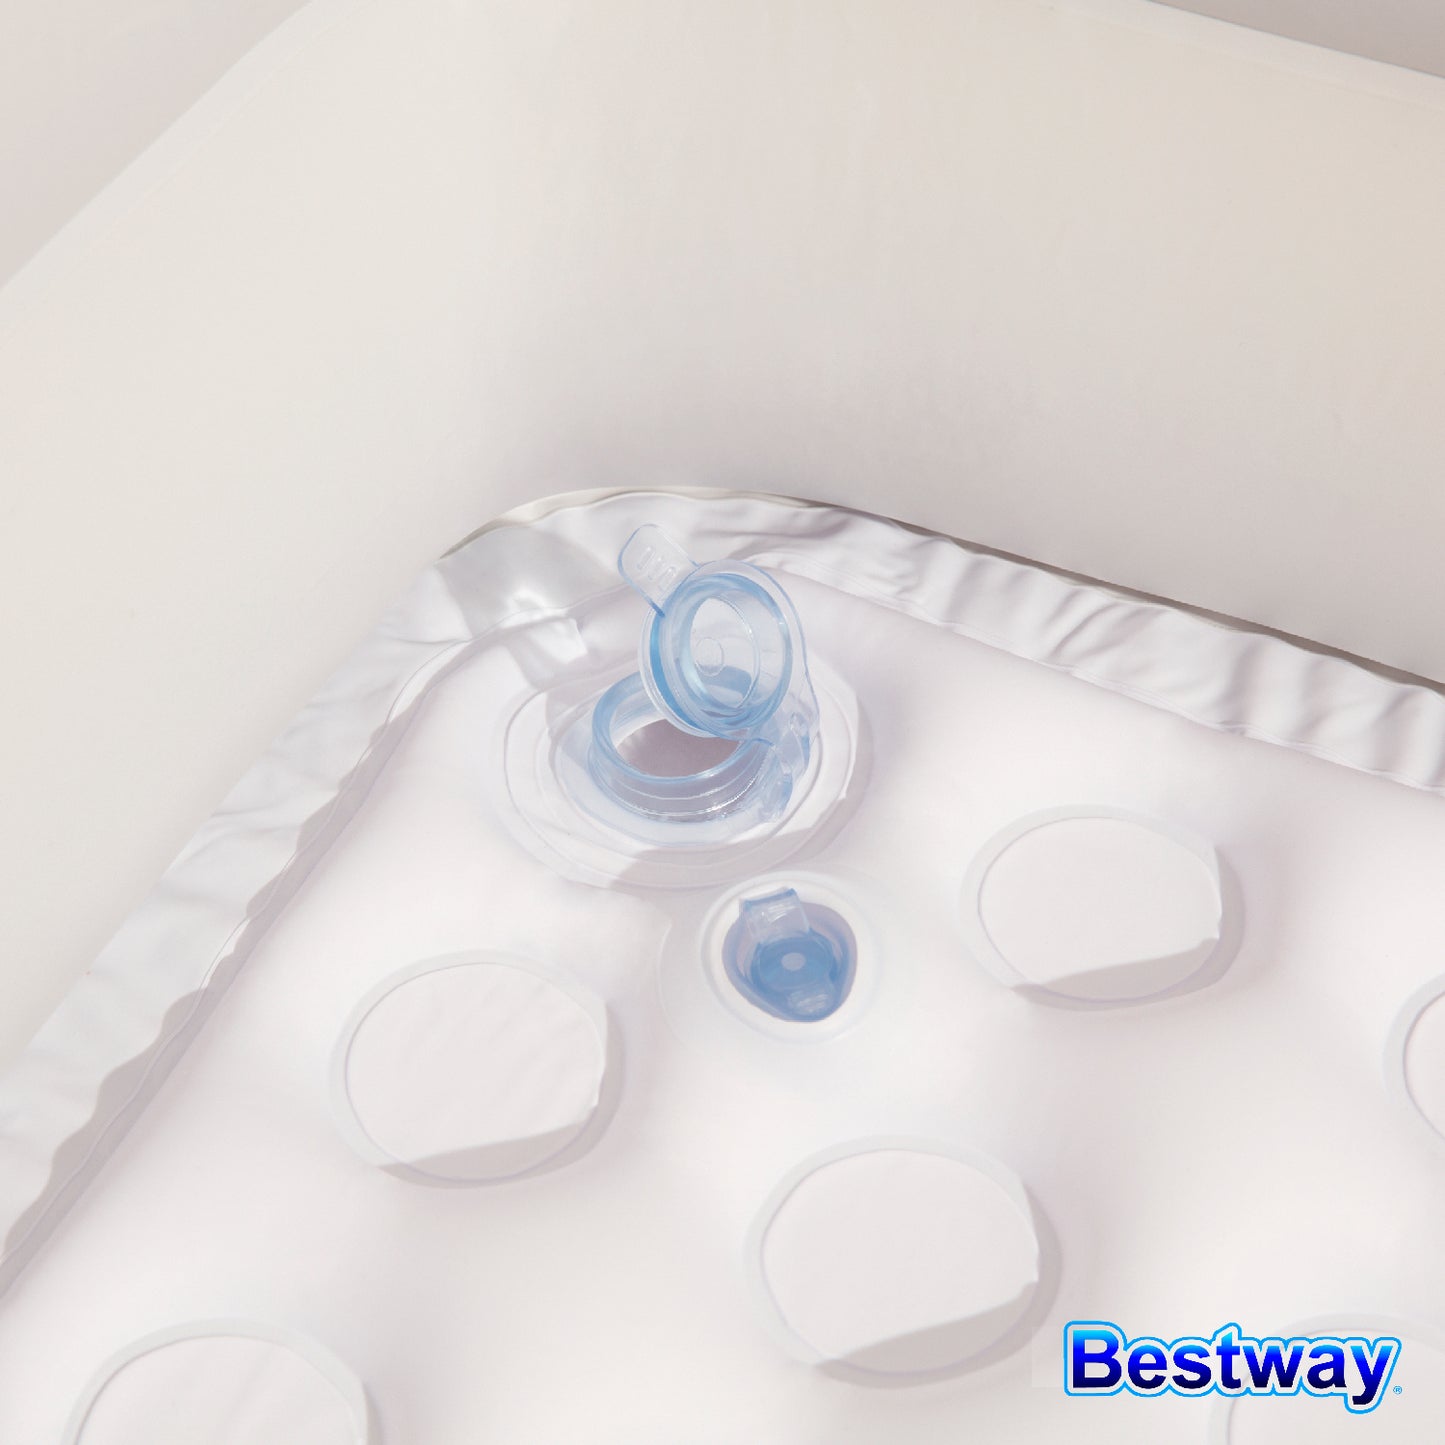 Bestway - Vasca Gonfiabile Baby-Tub 51116